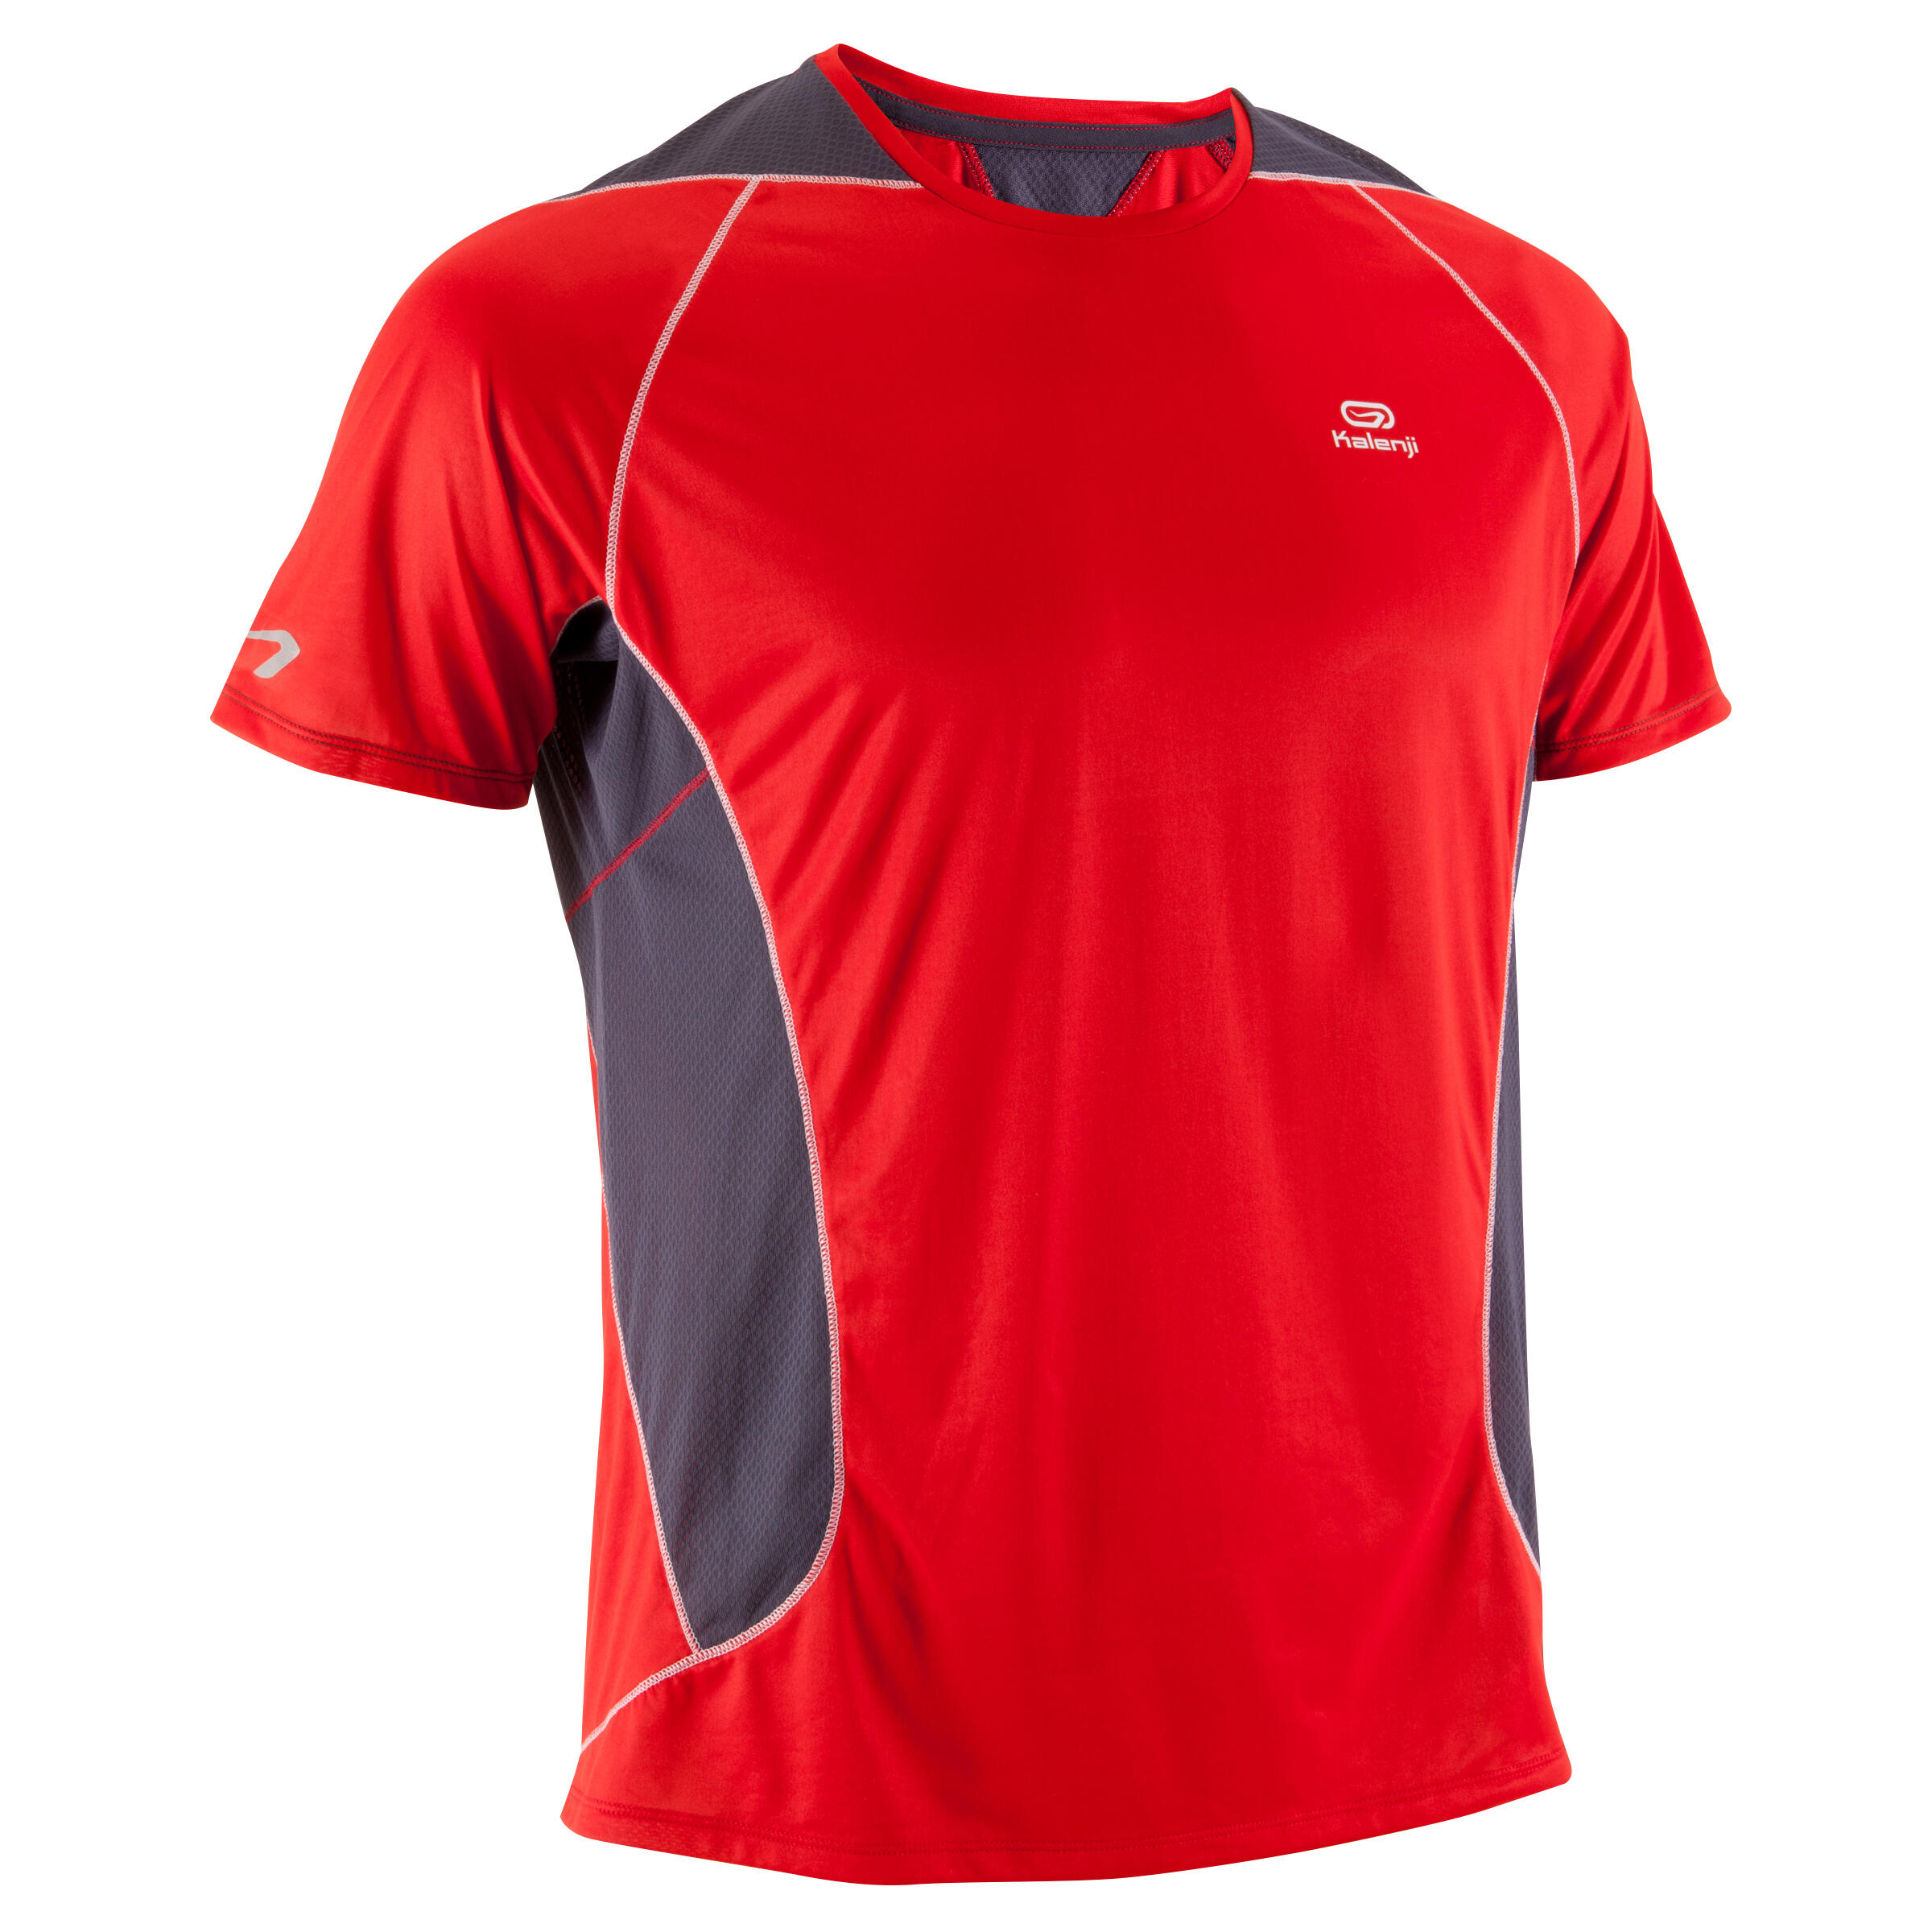 KALENJI Elio Men's Running T-Shirt - red